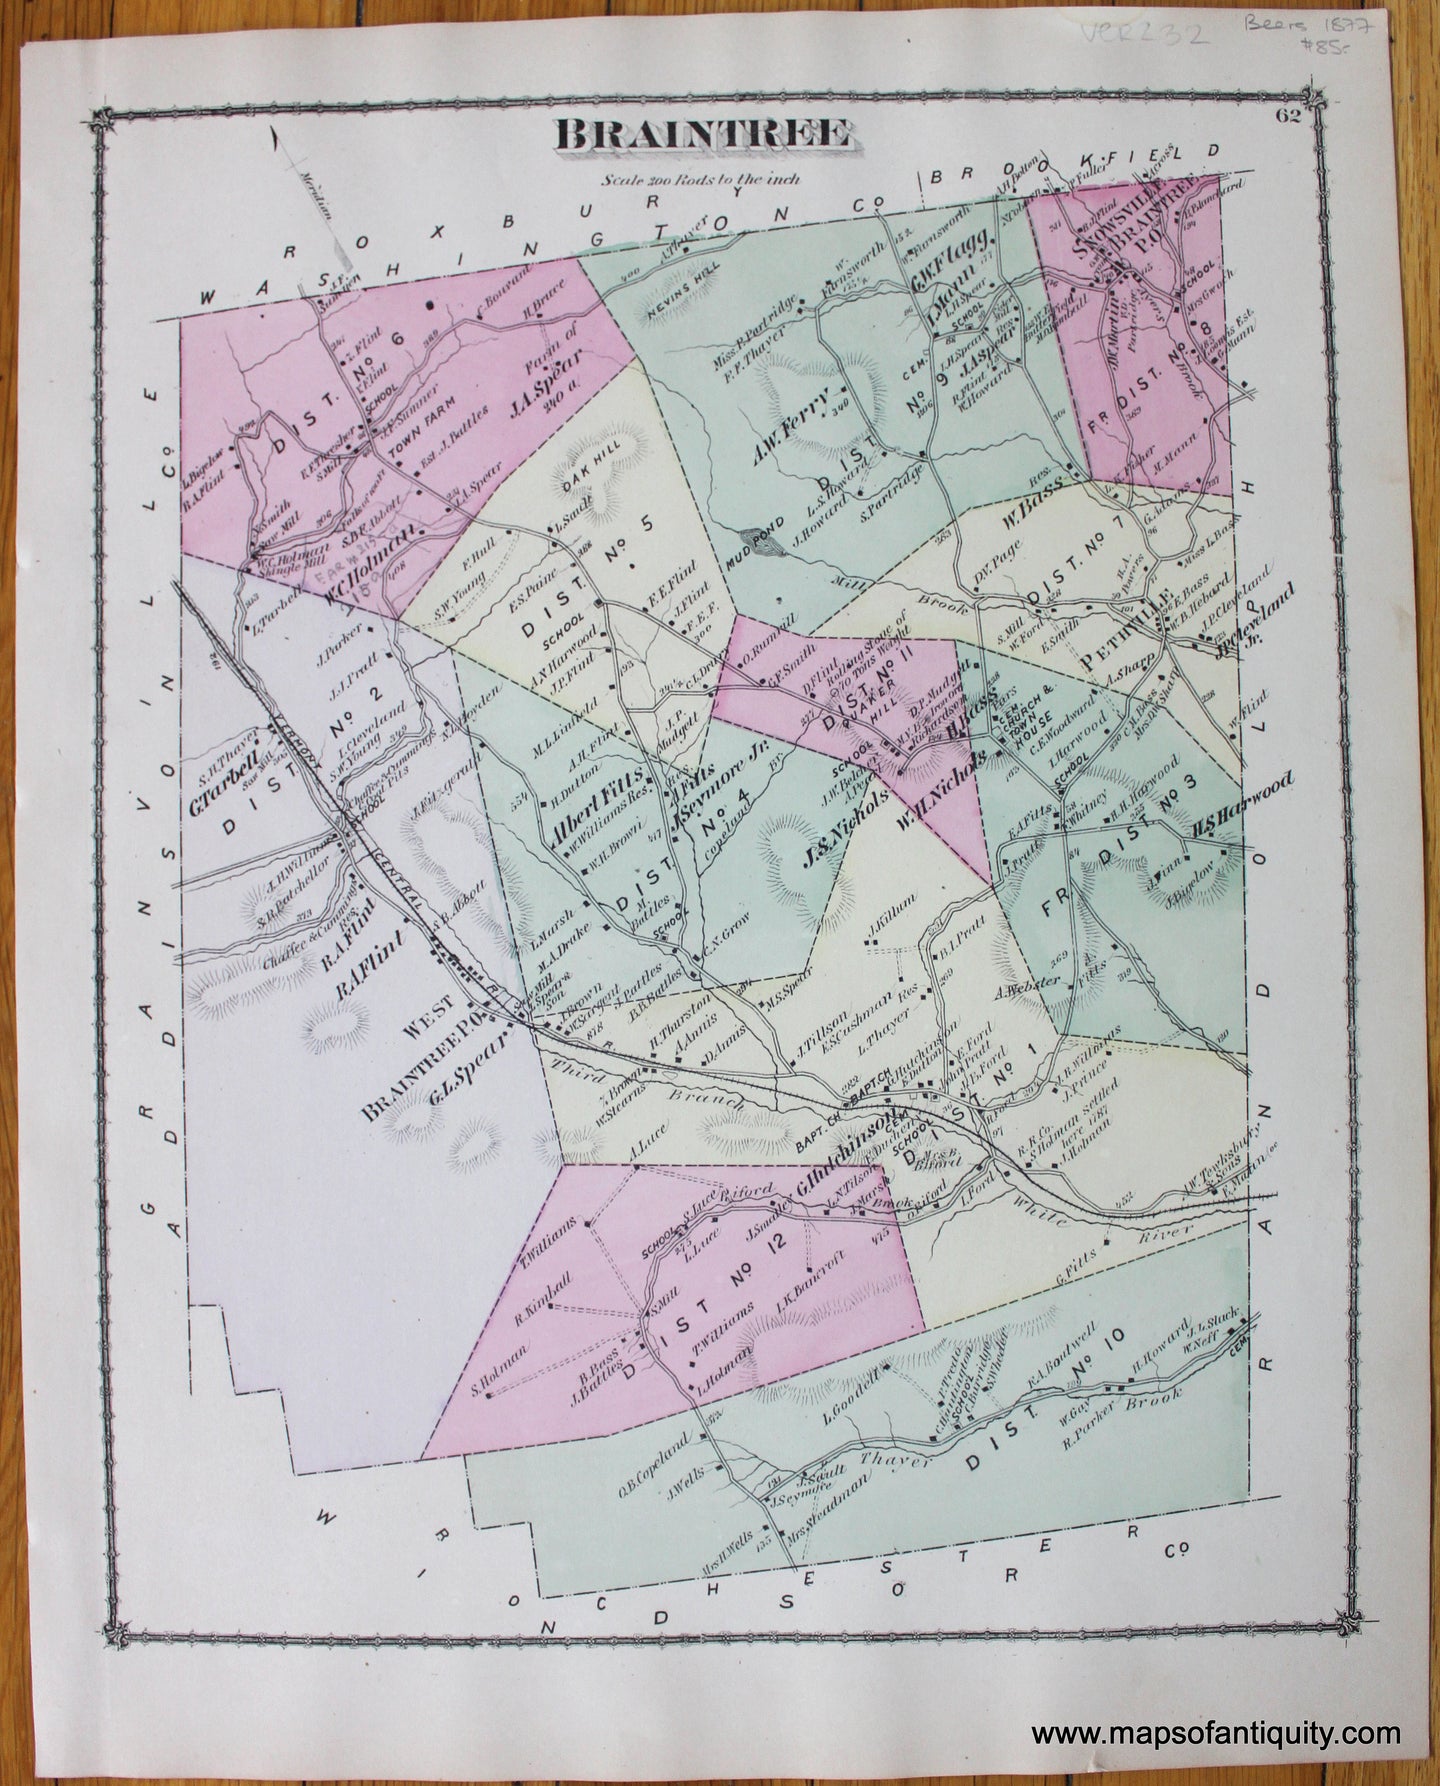 Braintree-1877-Beers-Antique-Map-Vermont-Orange-County-1870s-1800s-19th-century-Maps-of-Antiquity